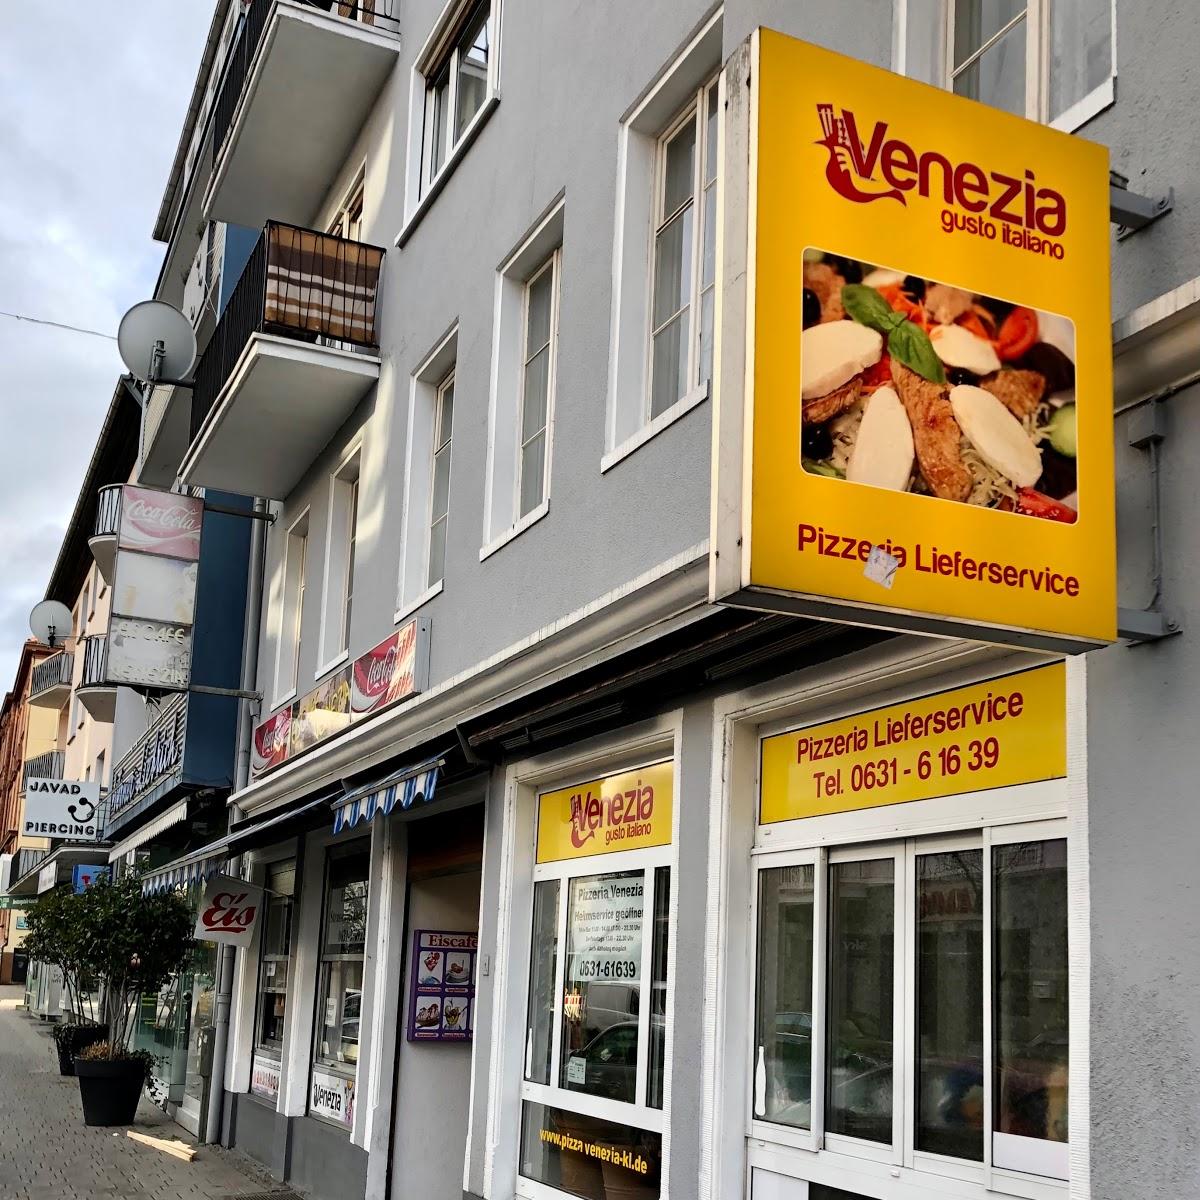 Restaurant "Eiscafé Venezia" in Kaiserslautern